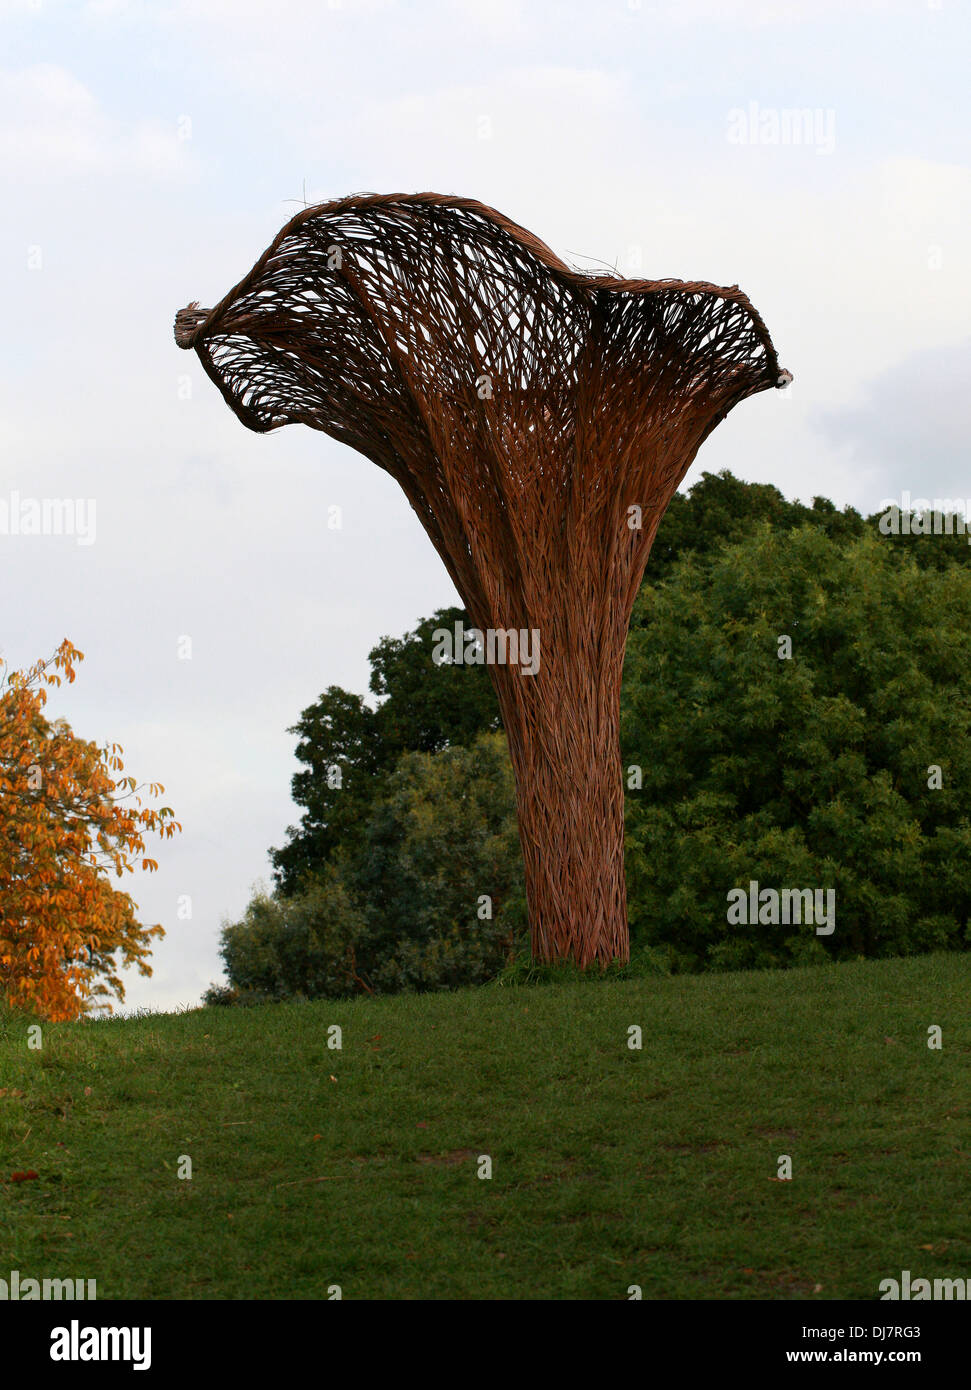 Willow Sculpture of Chantarelle Mushroom, Kew Royal Botanical Gardens. Stock Photo